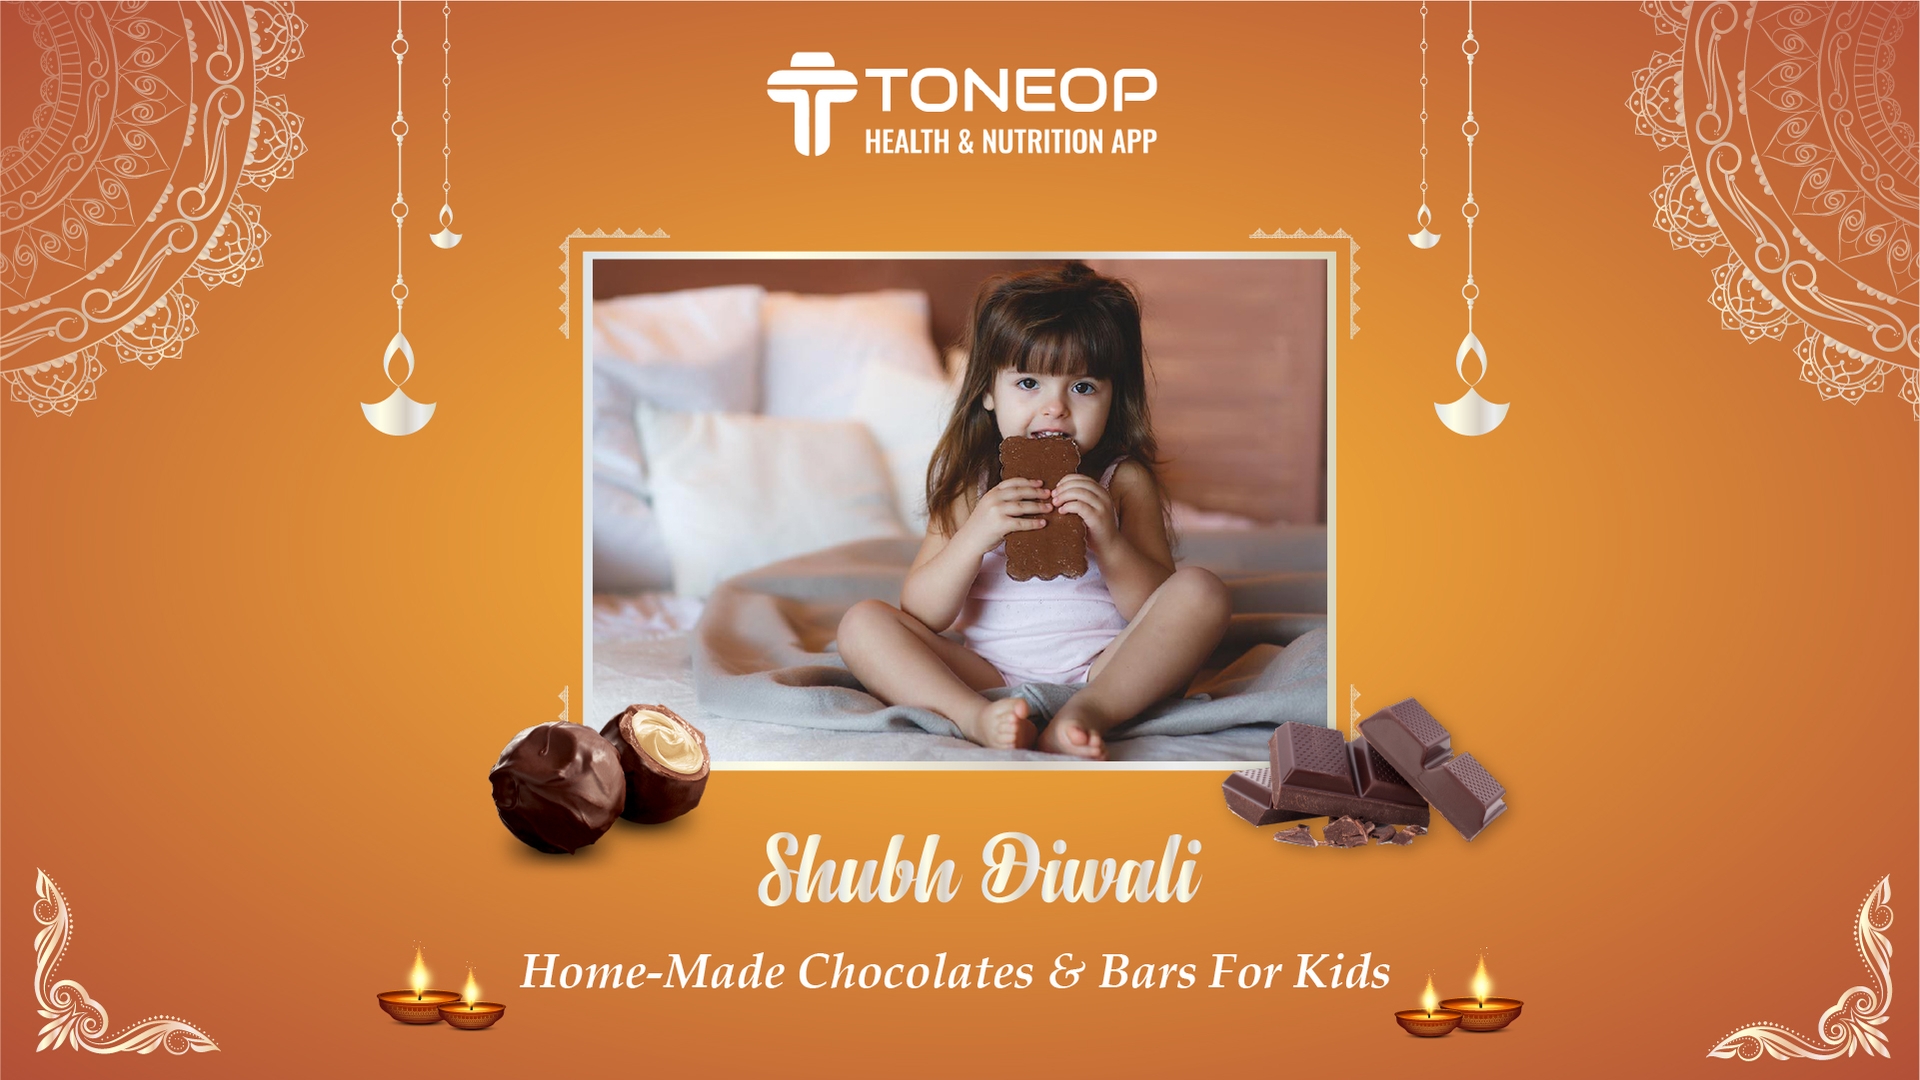 Shubh Diwali: Home-Made Chocolates And Bars For Kids